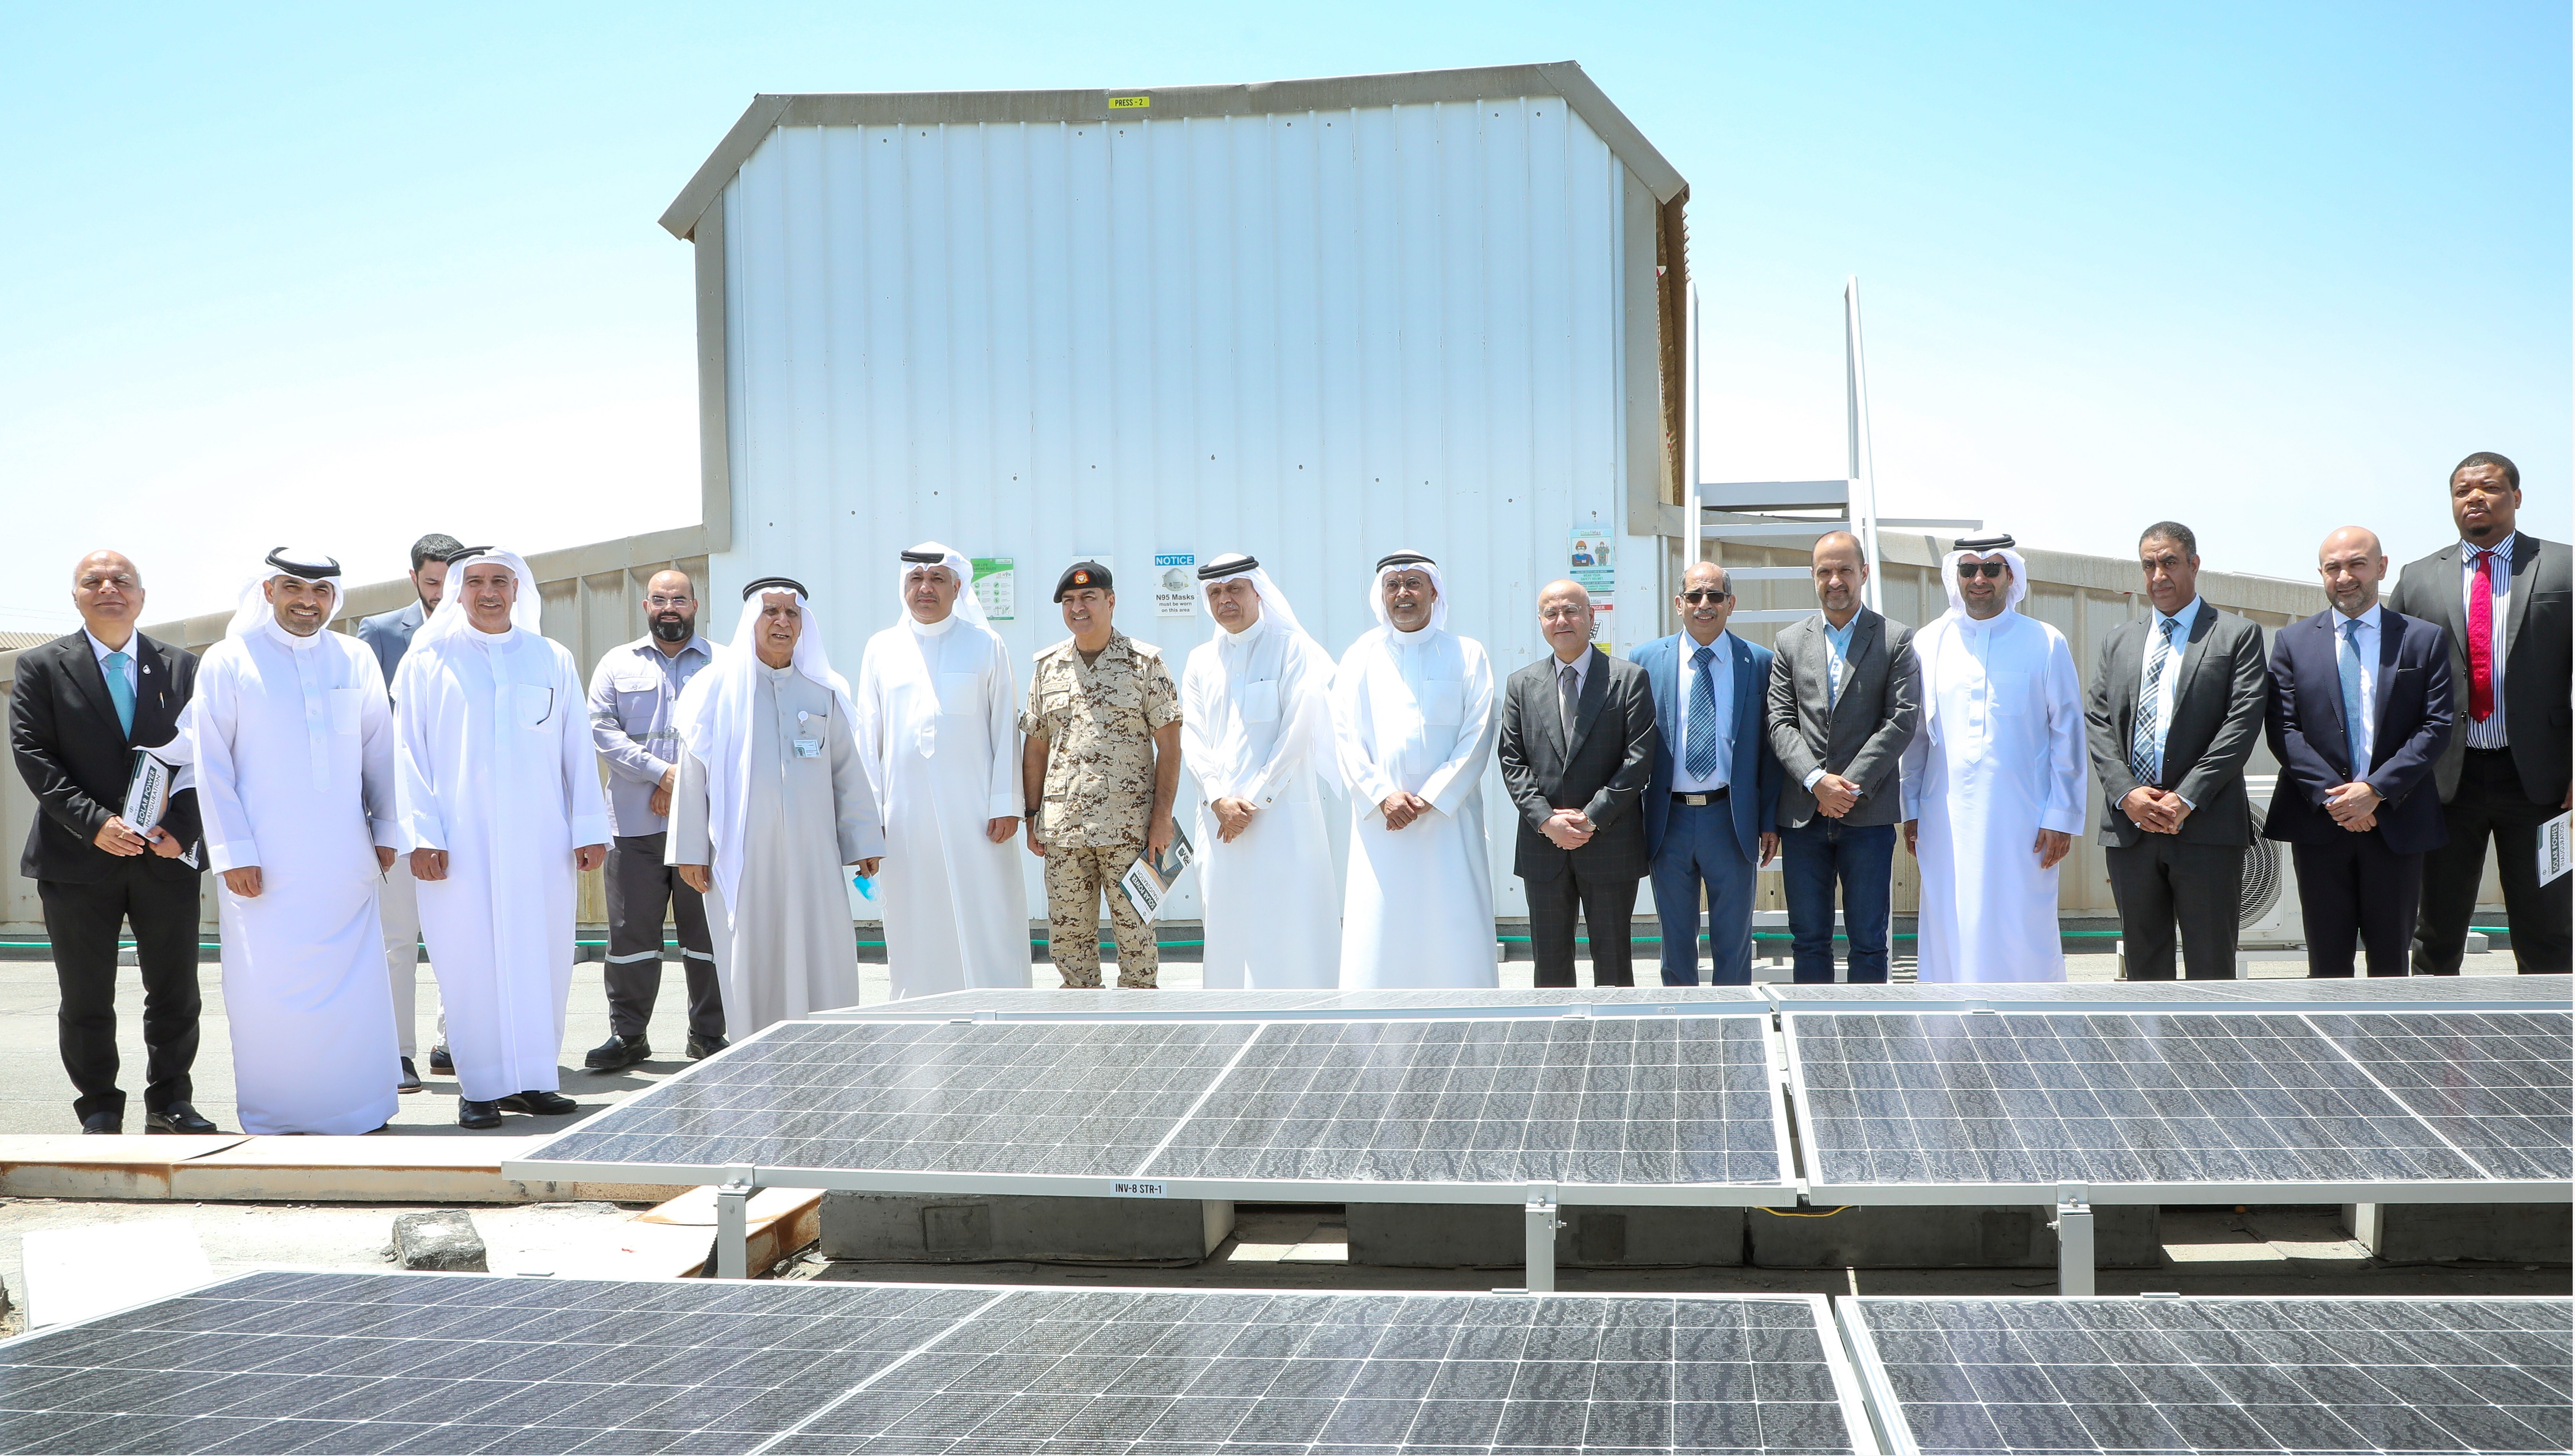 Balexco solar power plant opening